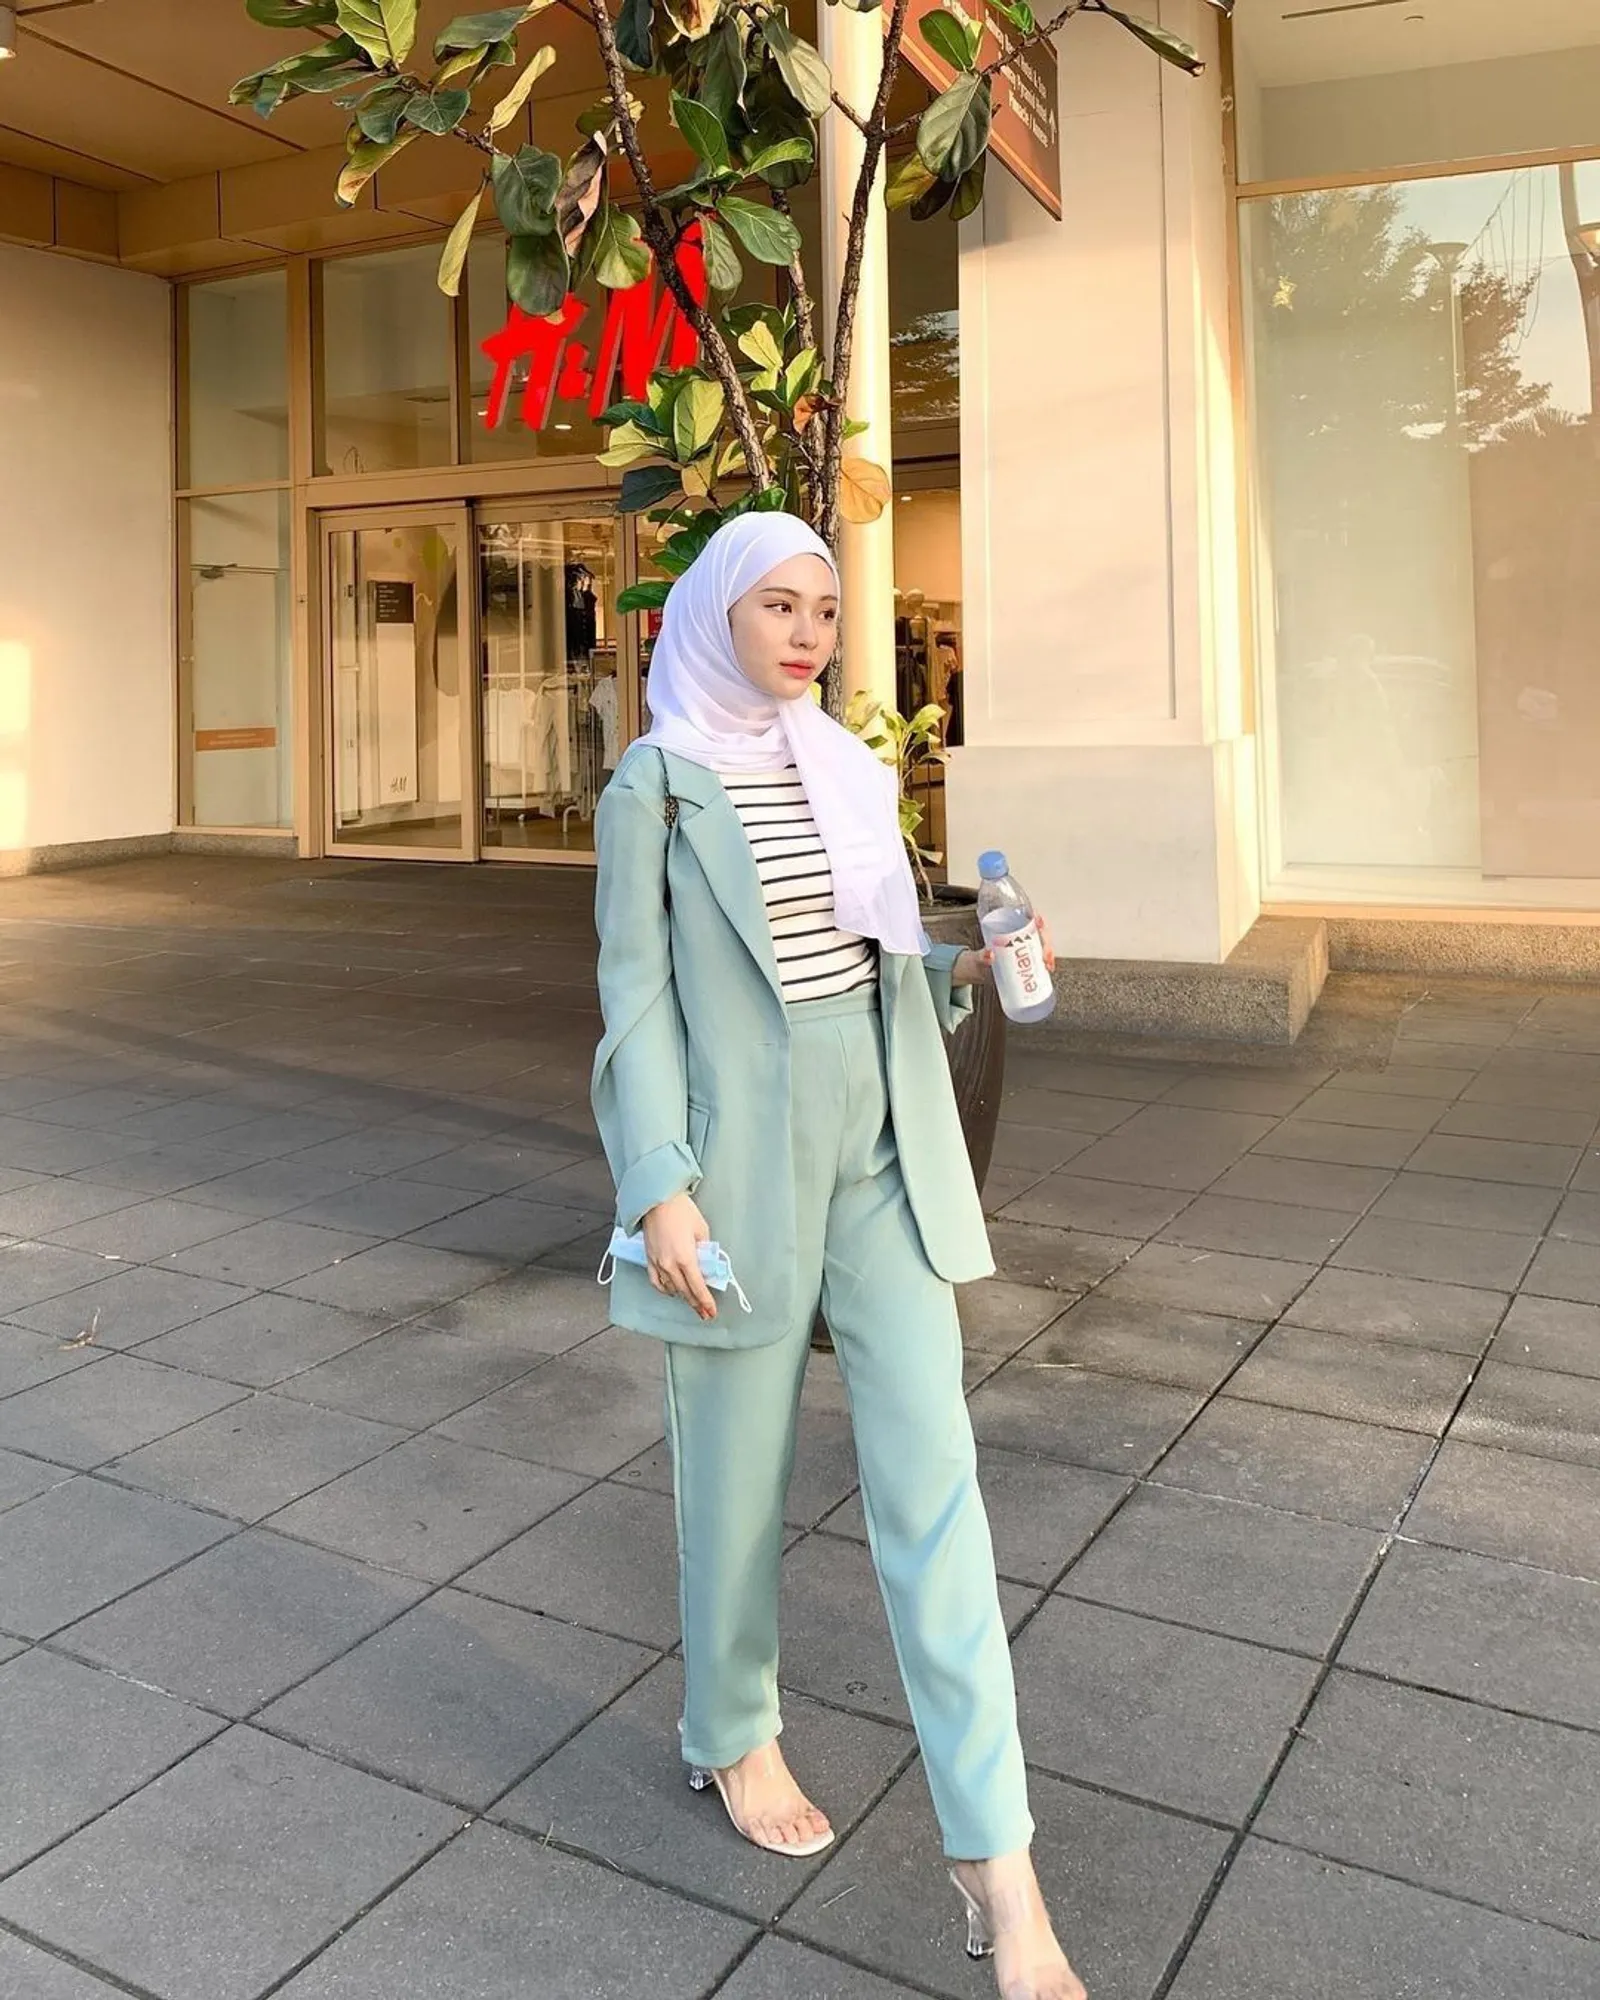 10 Warna Jilbab yang Cocok untuk Baju Hijau Mint